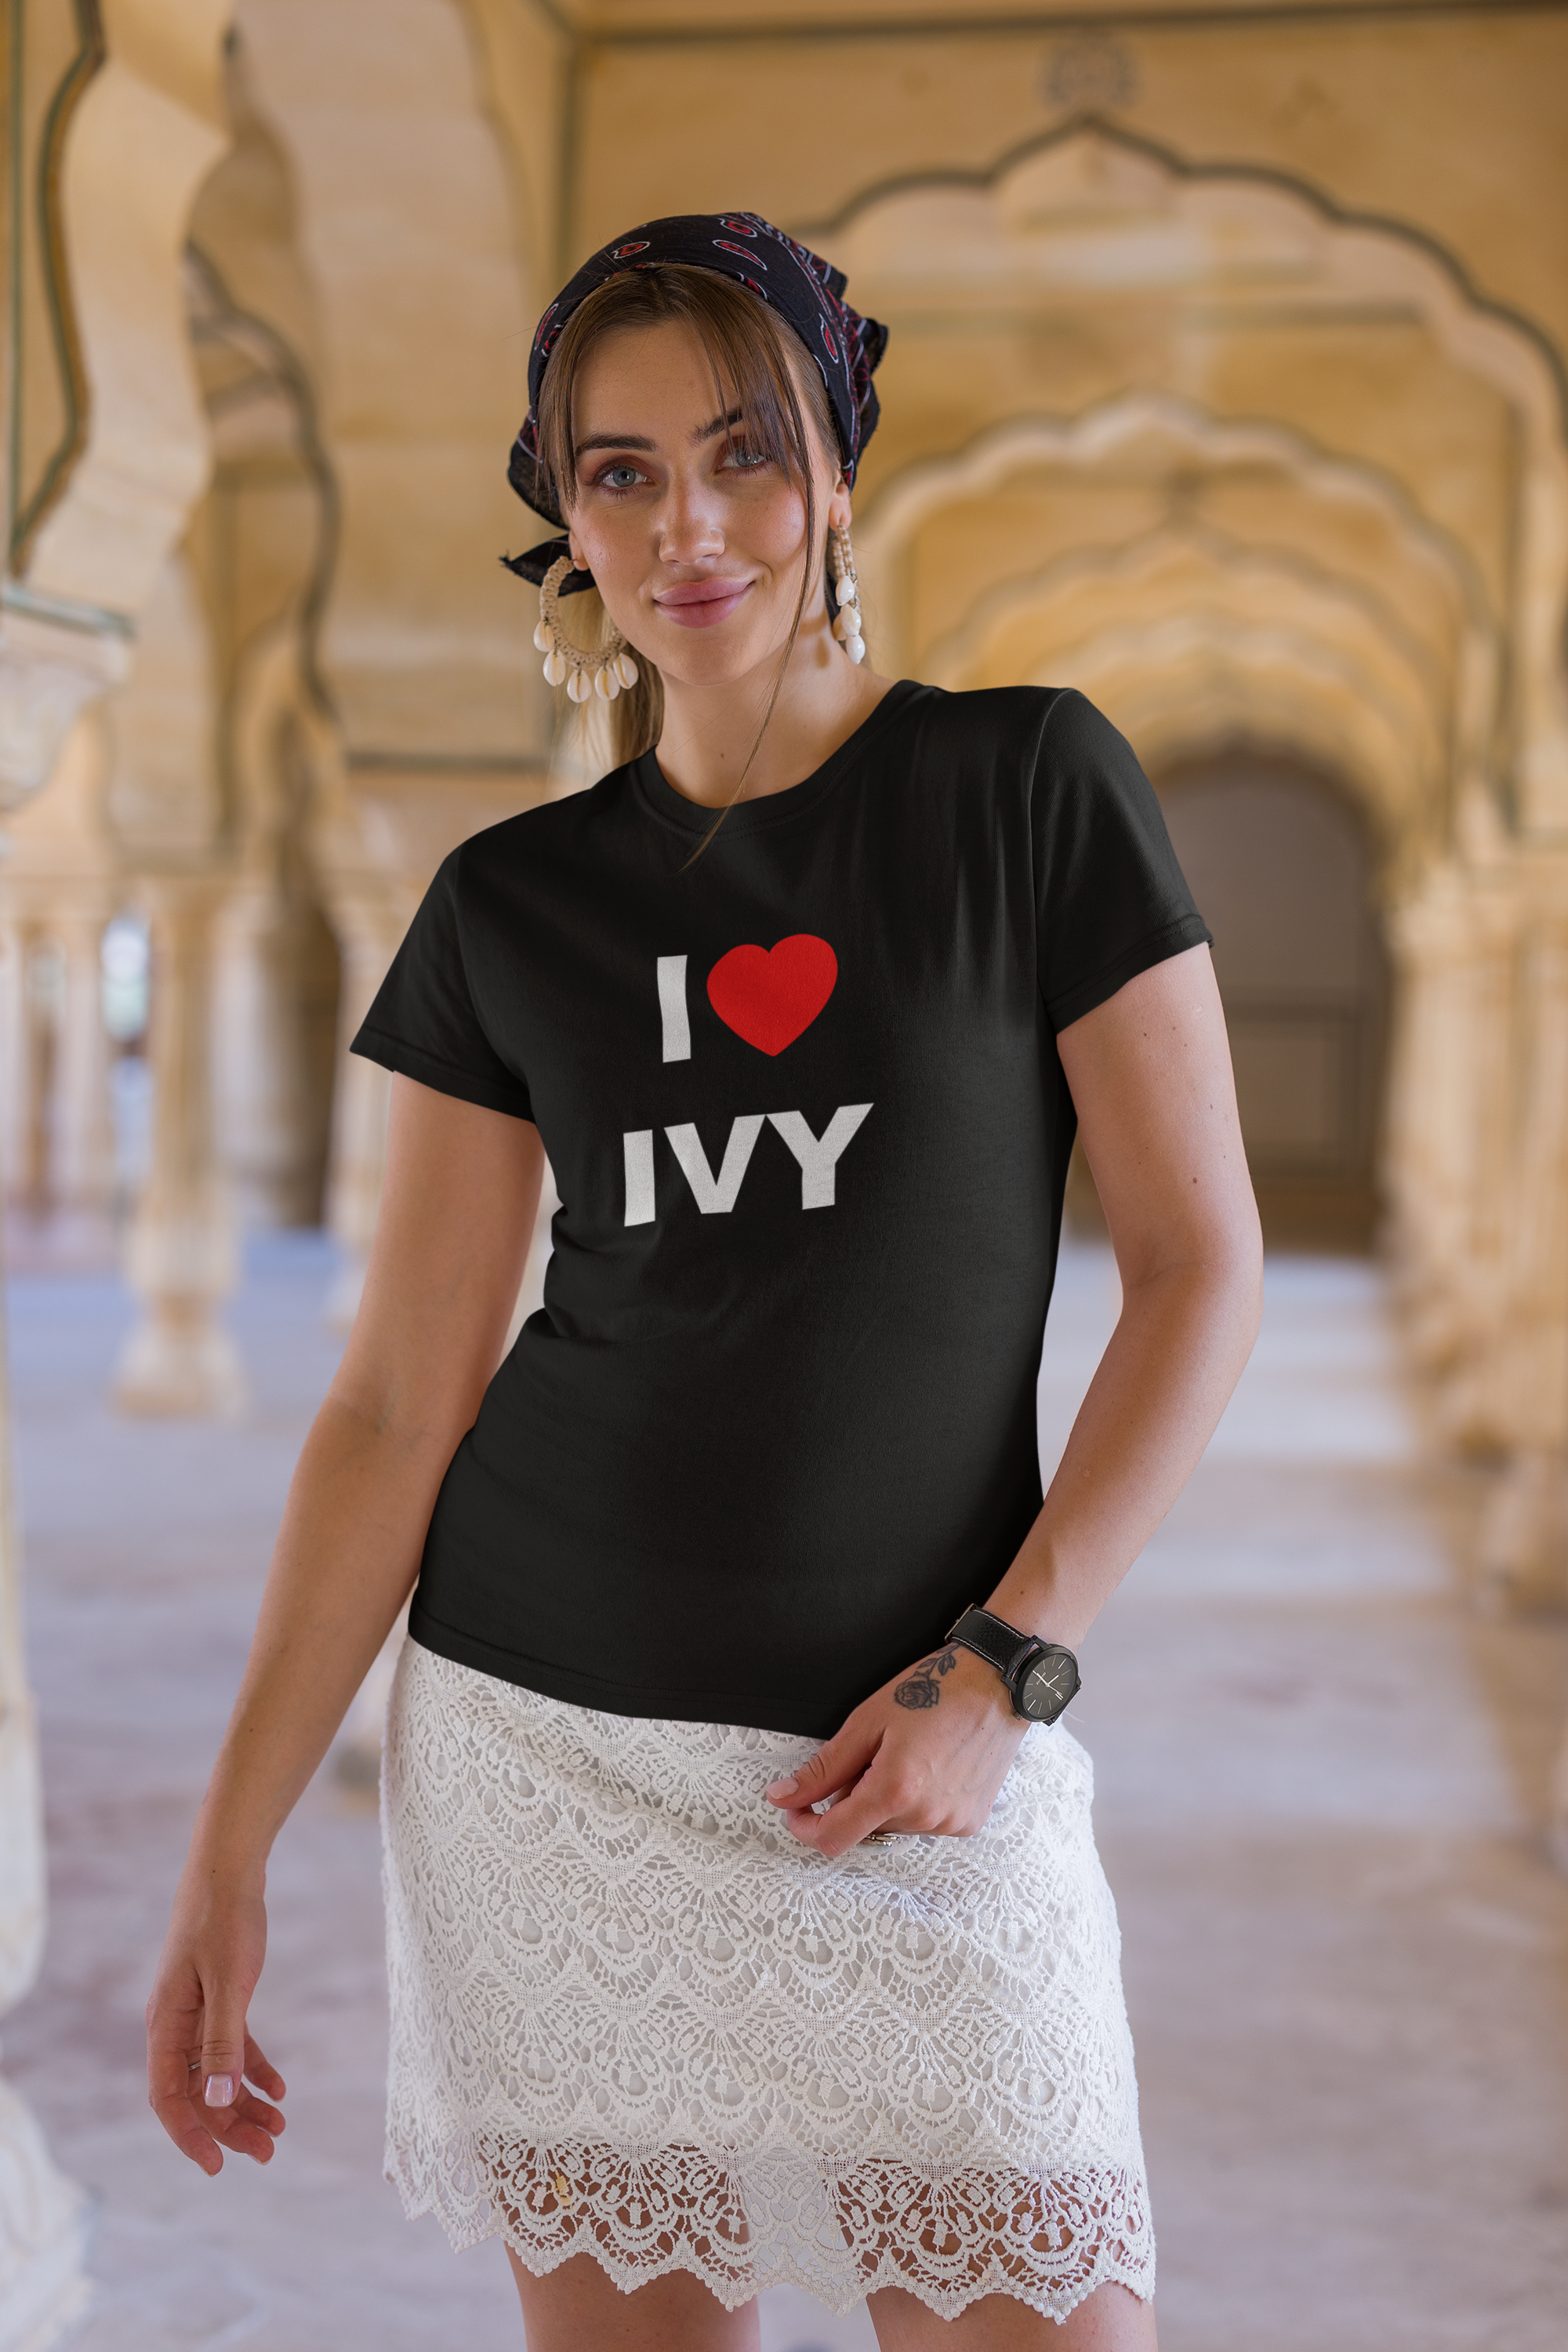 I Love IVY - Shirt Woman